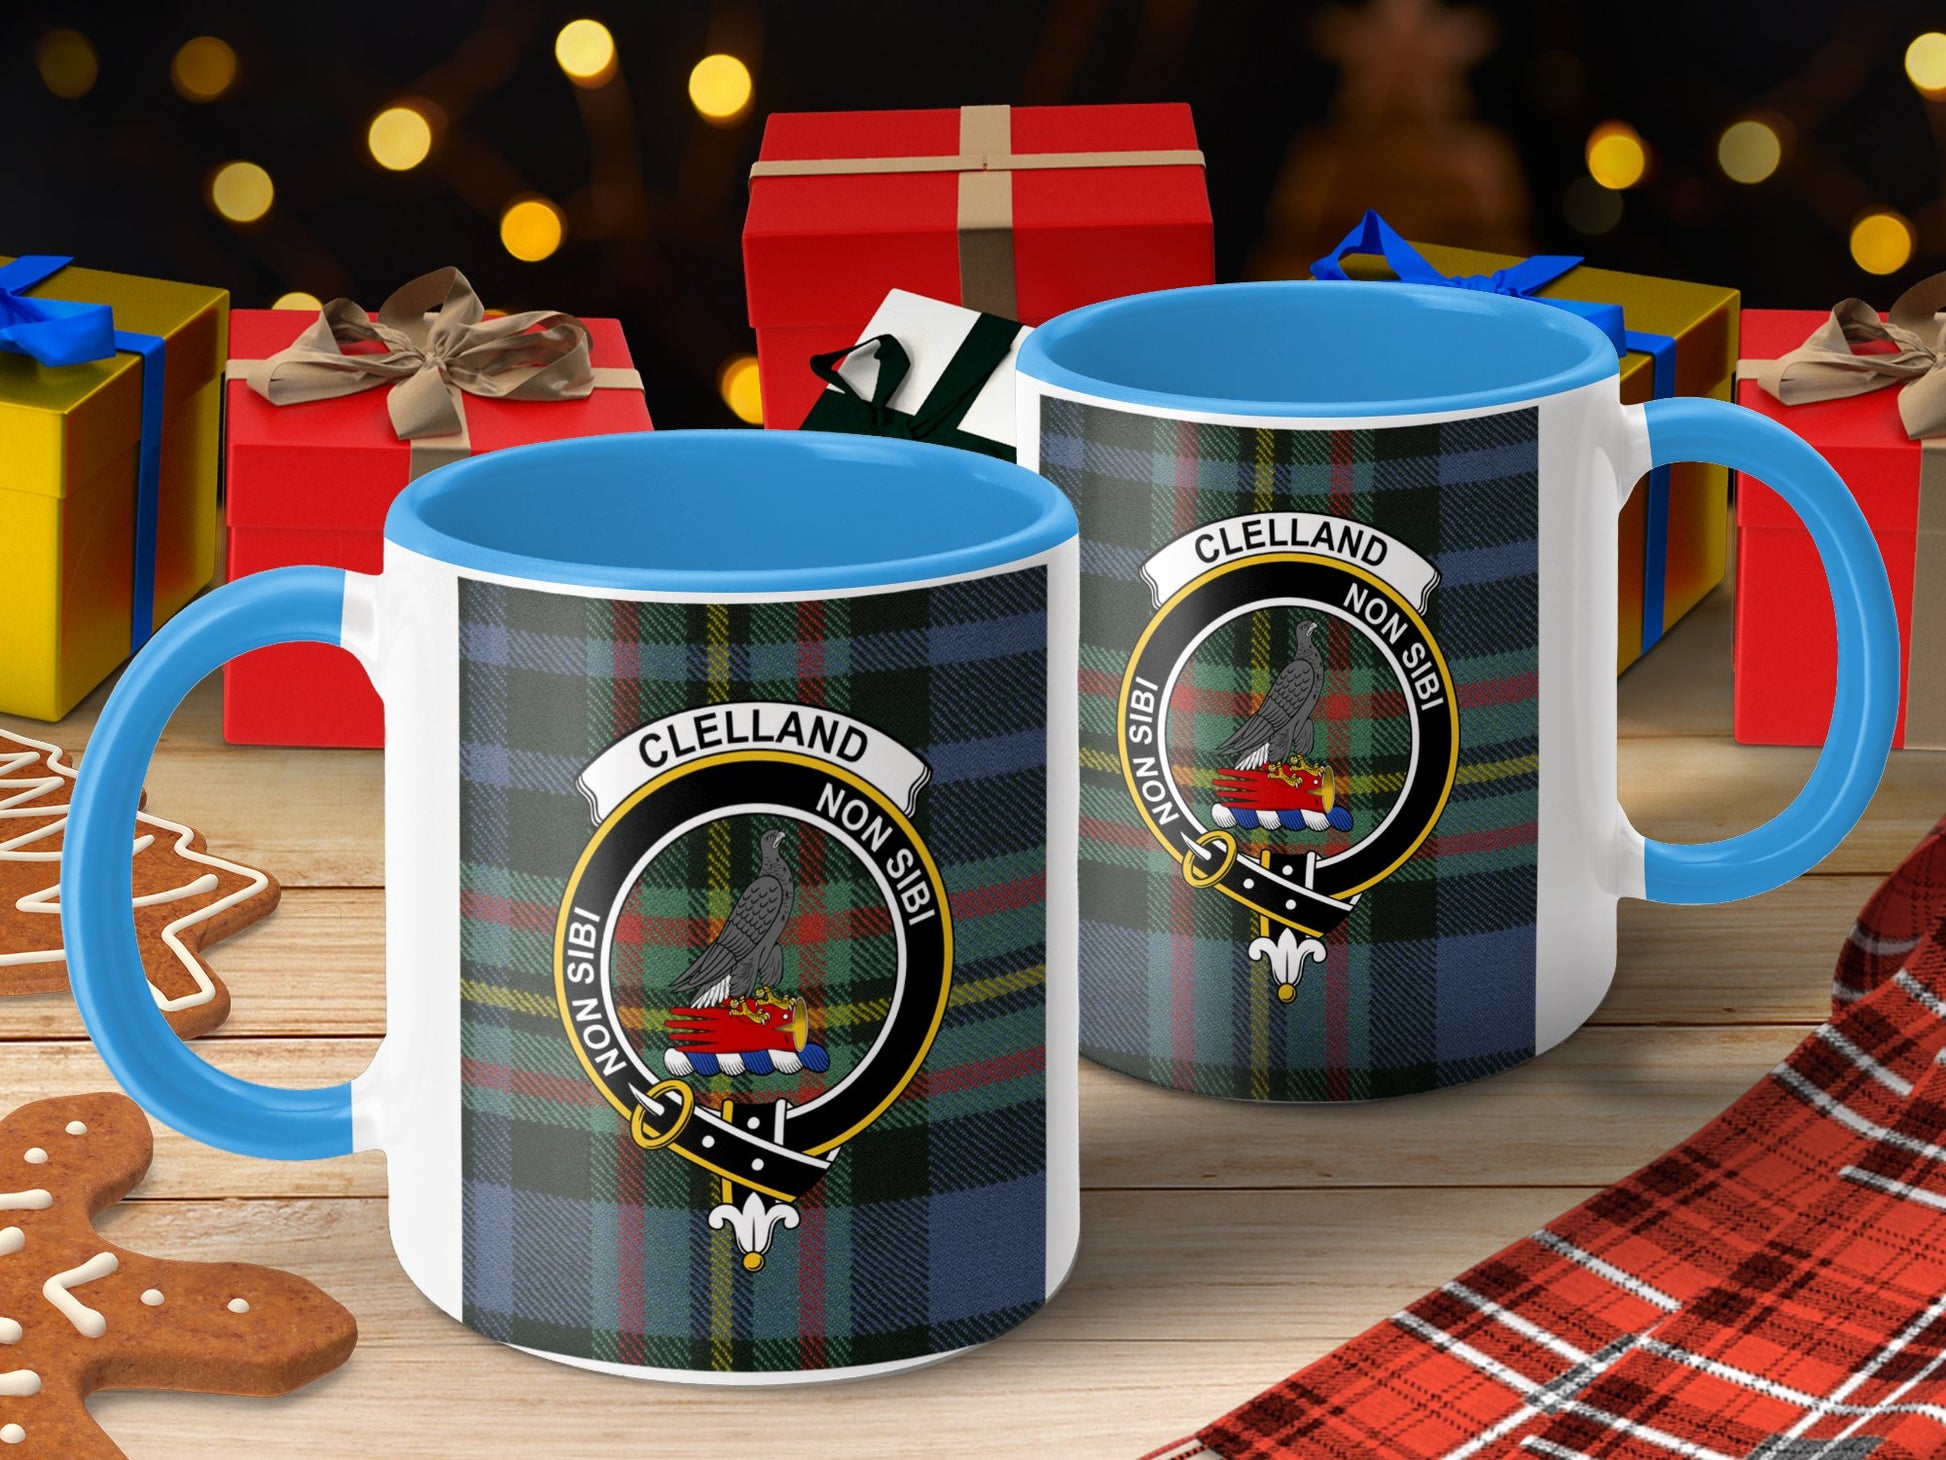 Clelland Scottish Clan Crest Plaid Design Mug - Living Stone Gifts